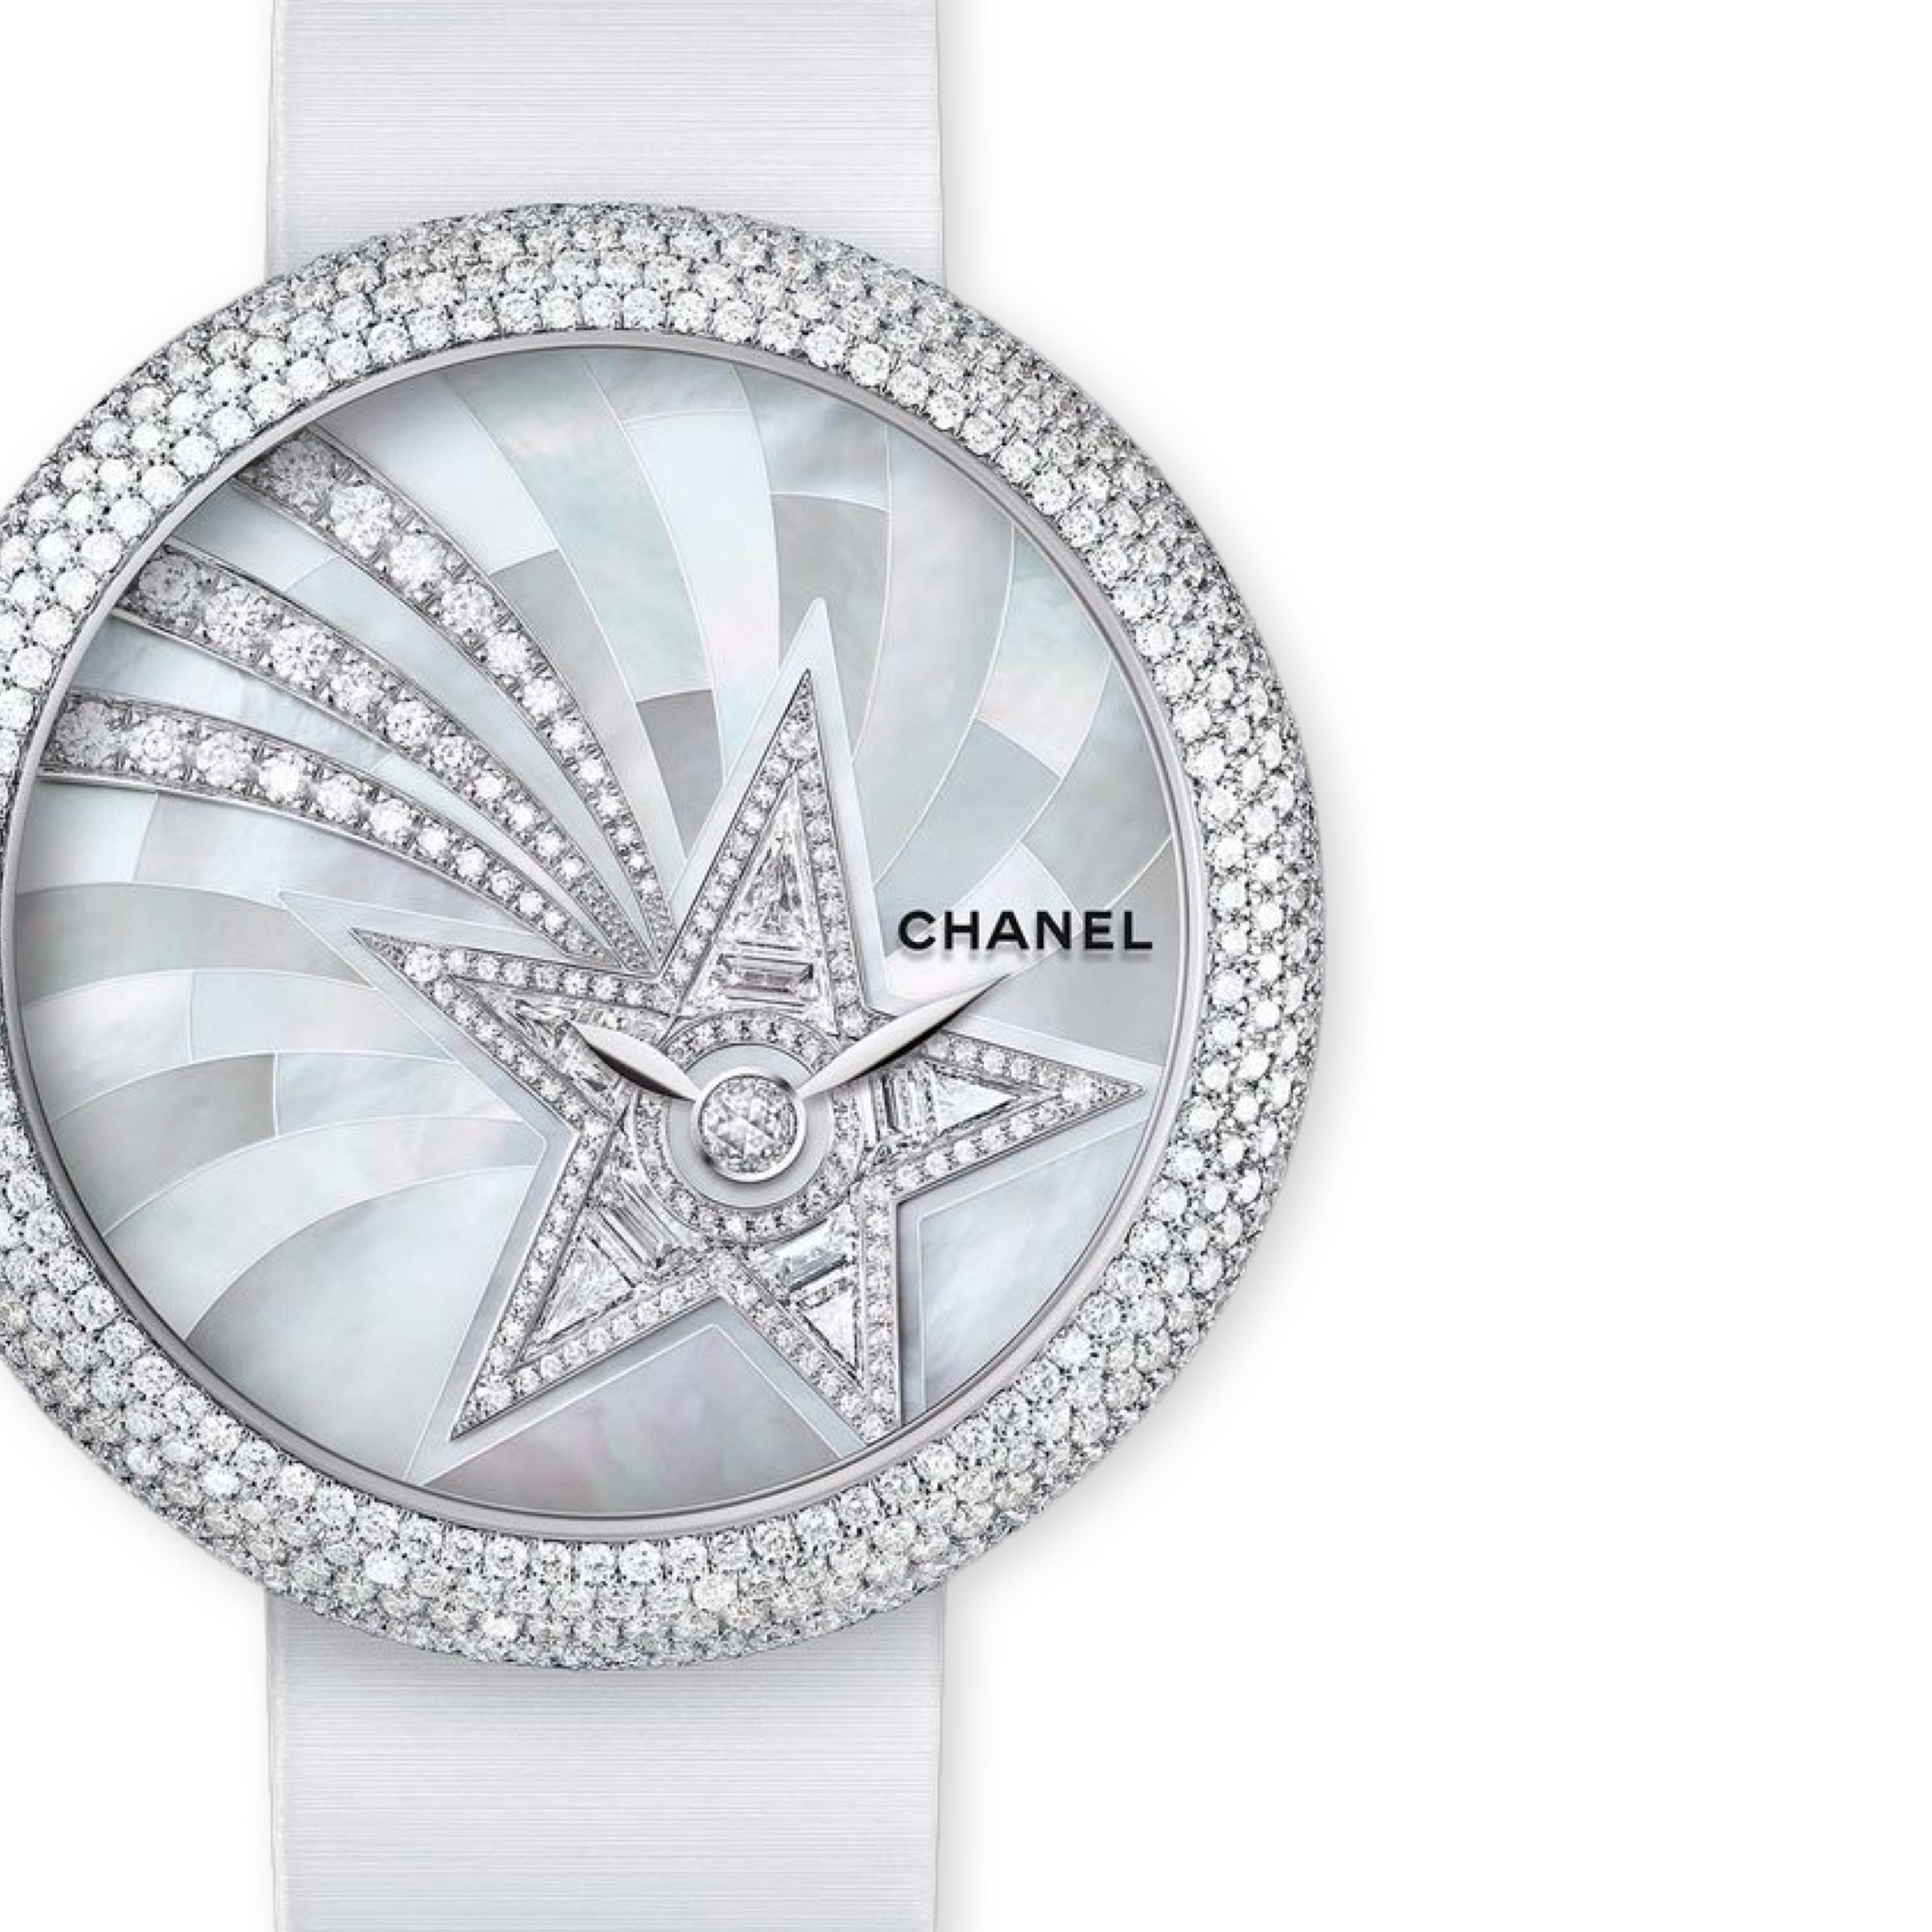 Chanel Style No: H4531
Chanel Mademoiselle Privé Quartz Watch - White Gold Diamond Case - Pearl Marquetry And Comet Motif Diamond Dial - White Satin Strap
37.5mm

18K white gold case 

570 brilliant-cut diamonds (~3.14 carats), 

9.84 mm thick,